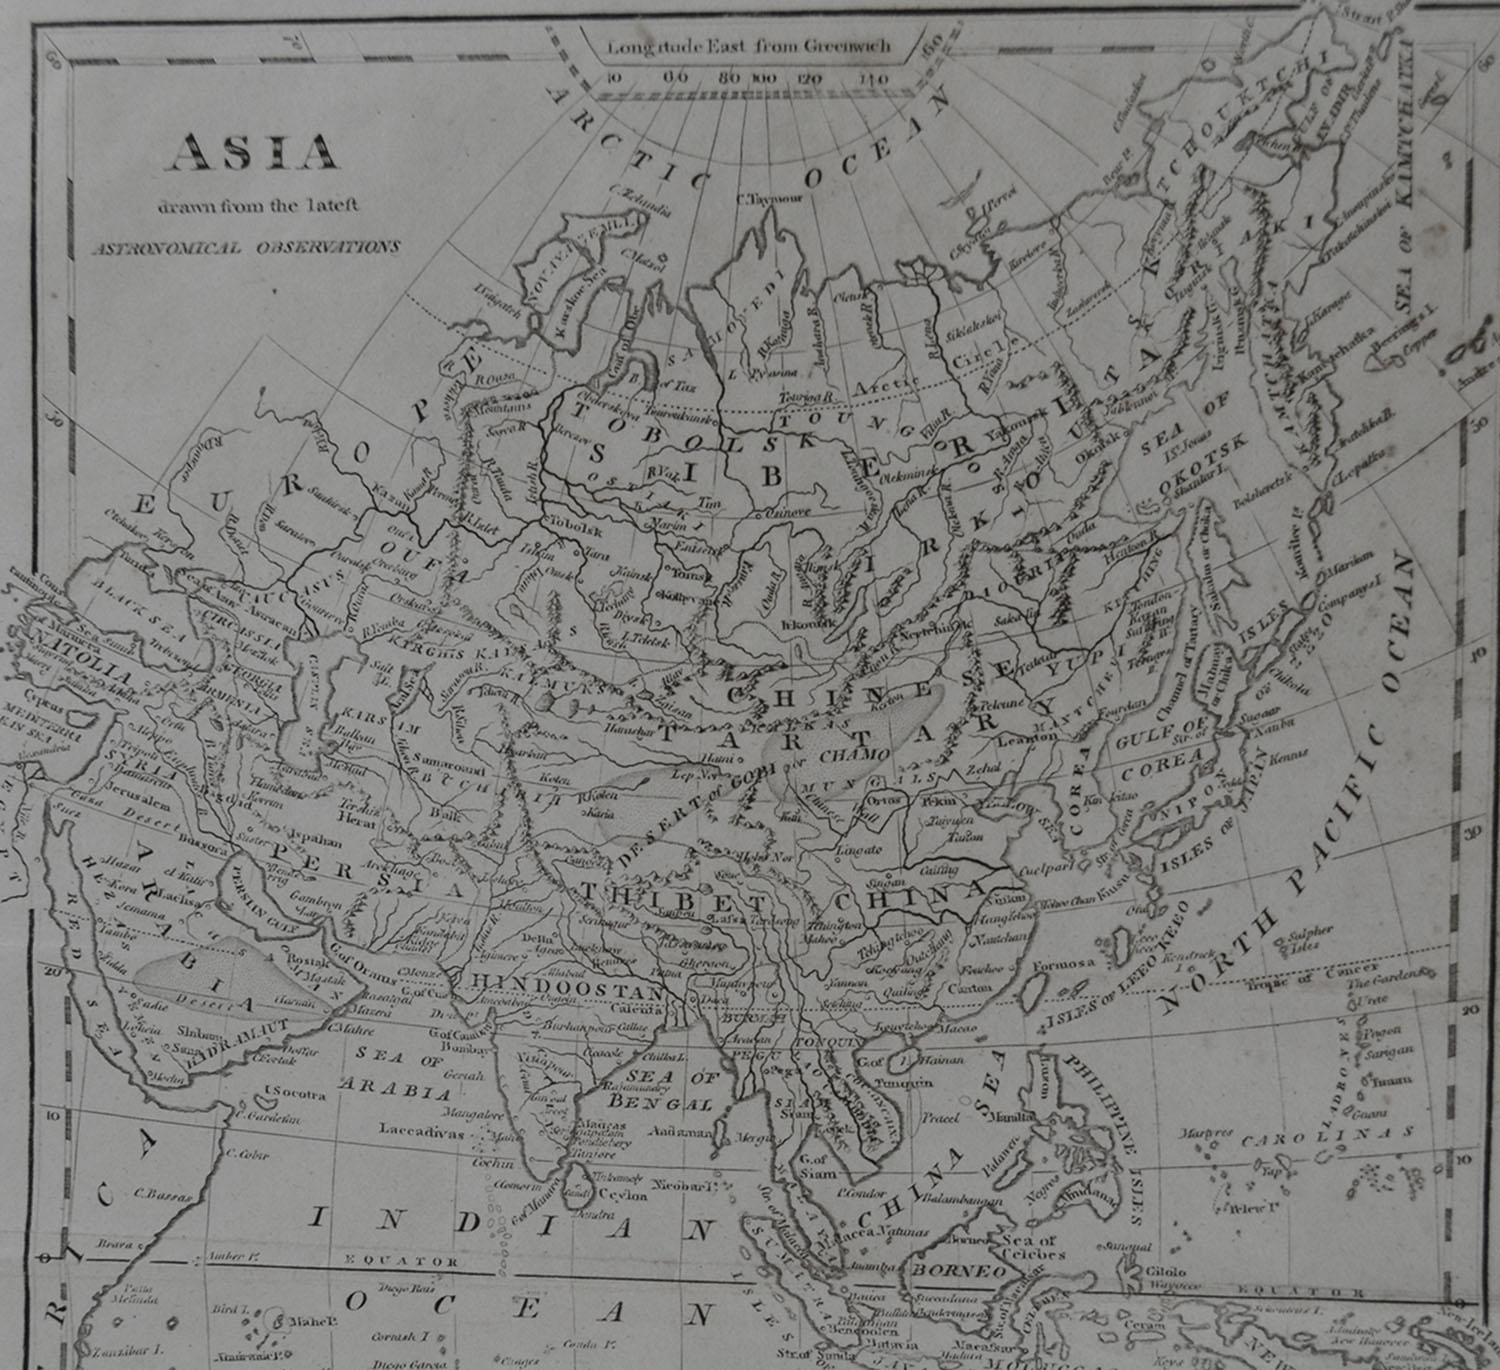 Other Original Antique Map of Asia, circa 1800